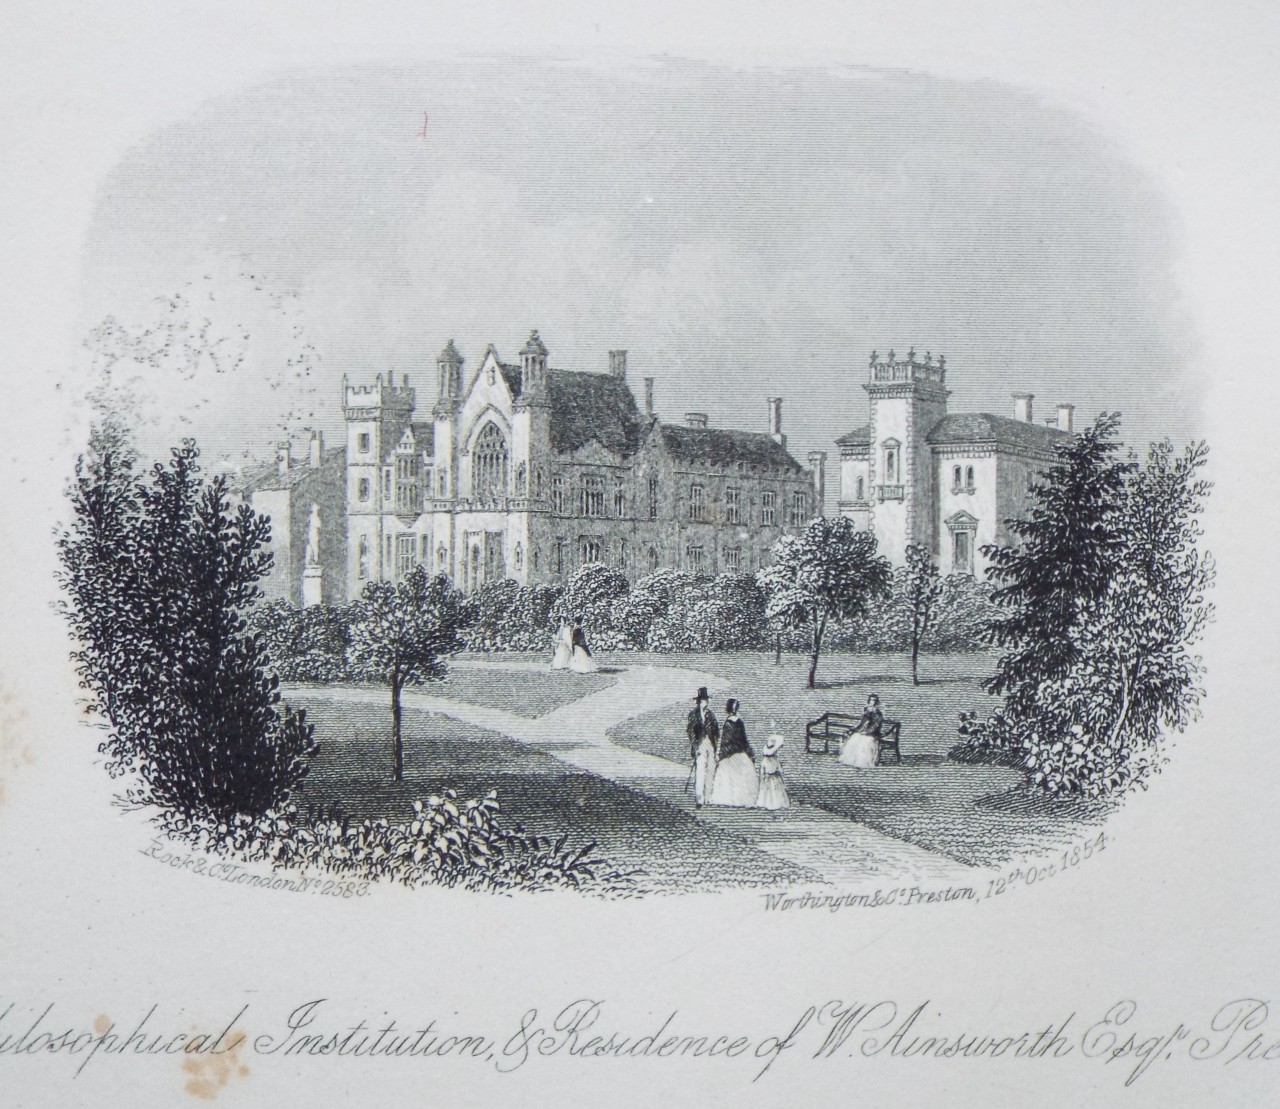 Steel Vignette - Philosophical Institution & Residence of W. Ainsworth Esqre, Preston. - Rock